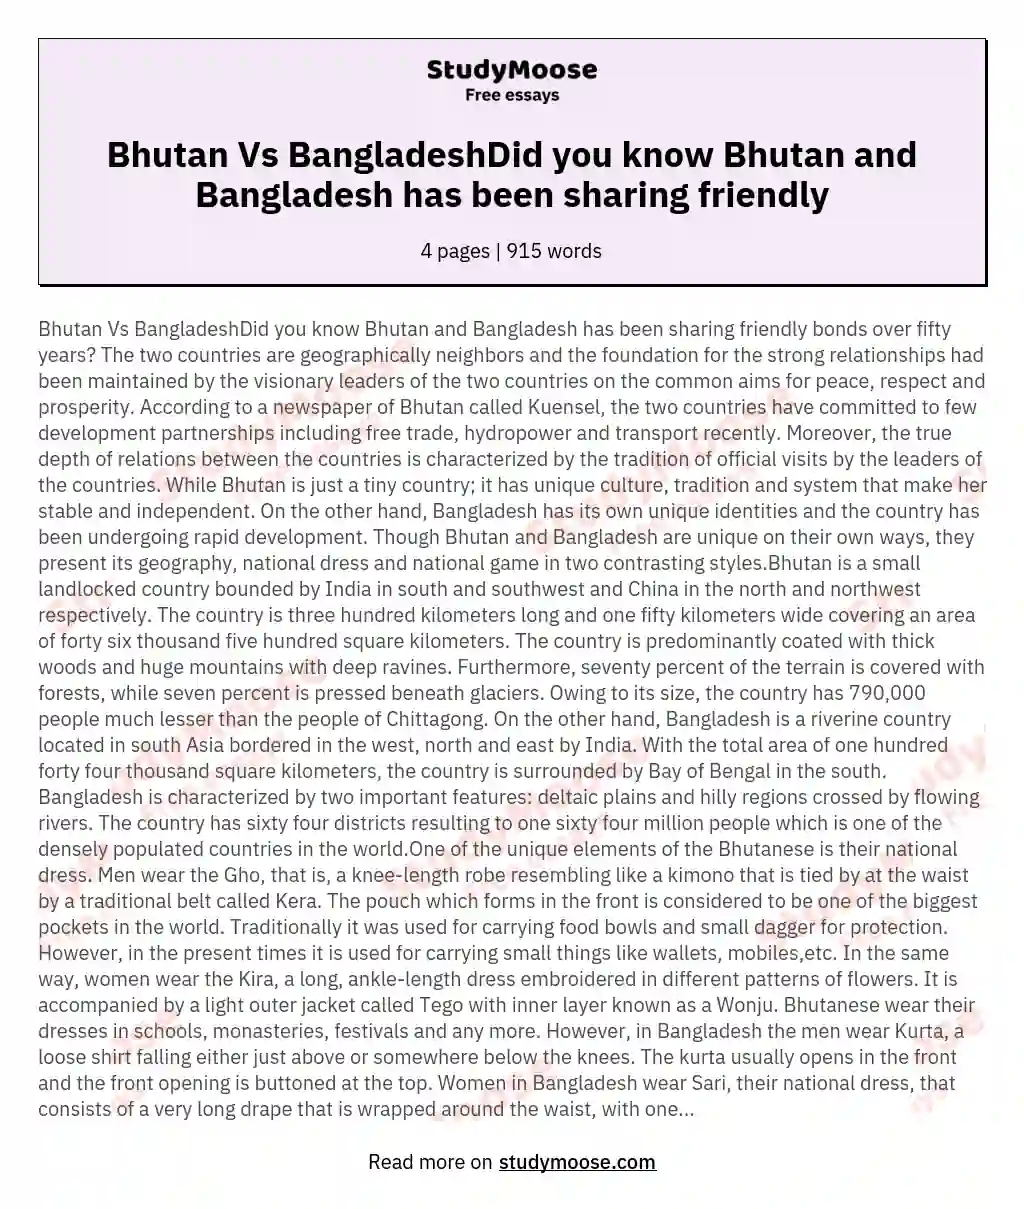 Bhutan Vs BangladeshDid you know Bhutan and Bangladesh has been sharing friendly